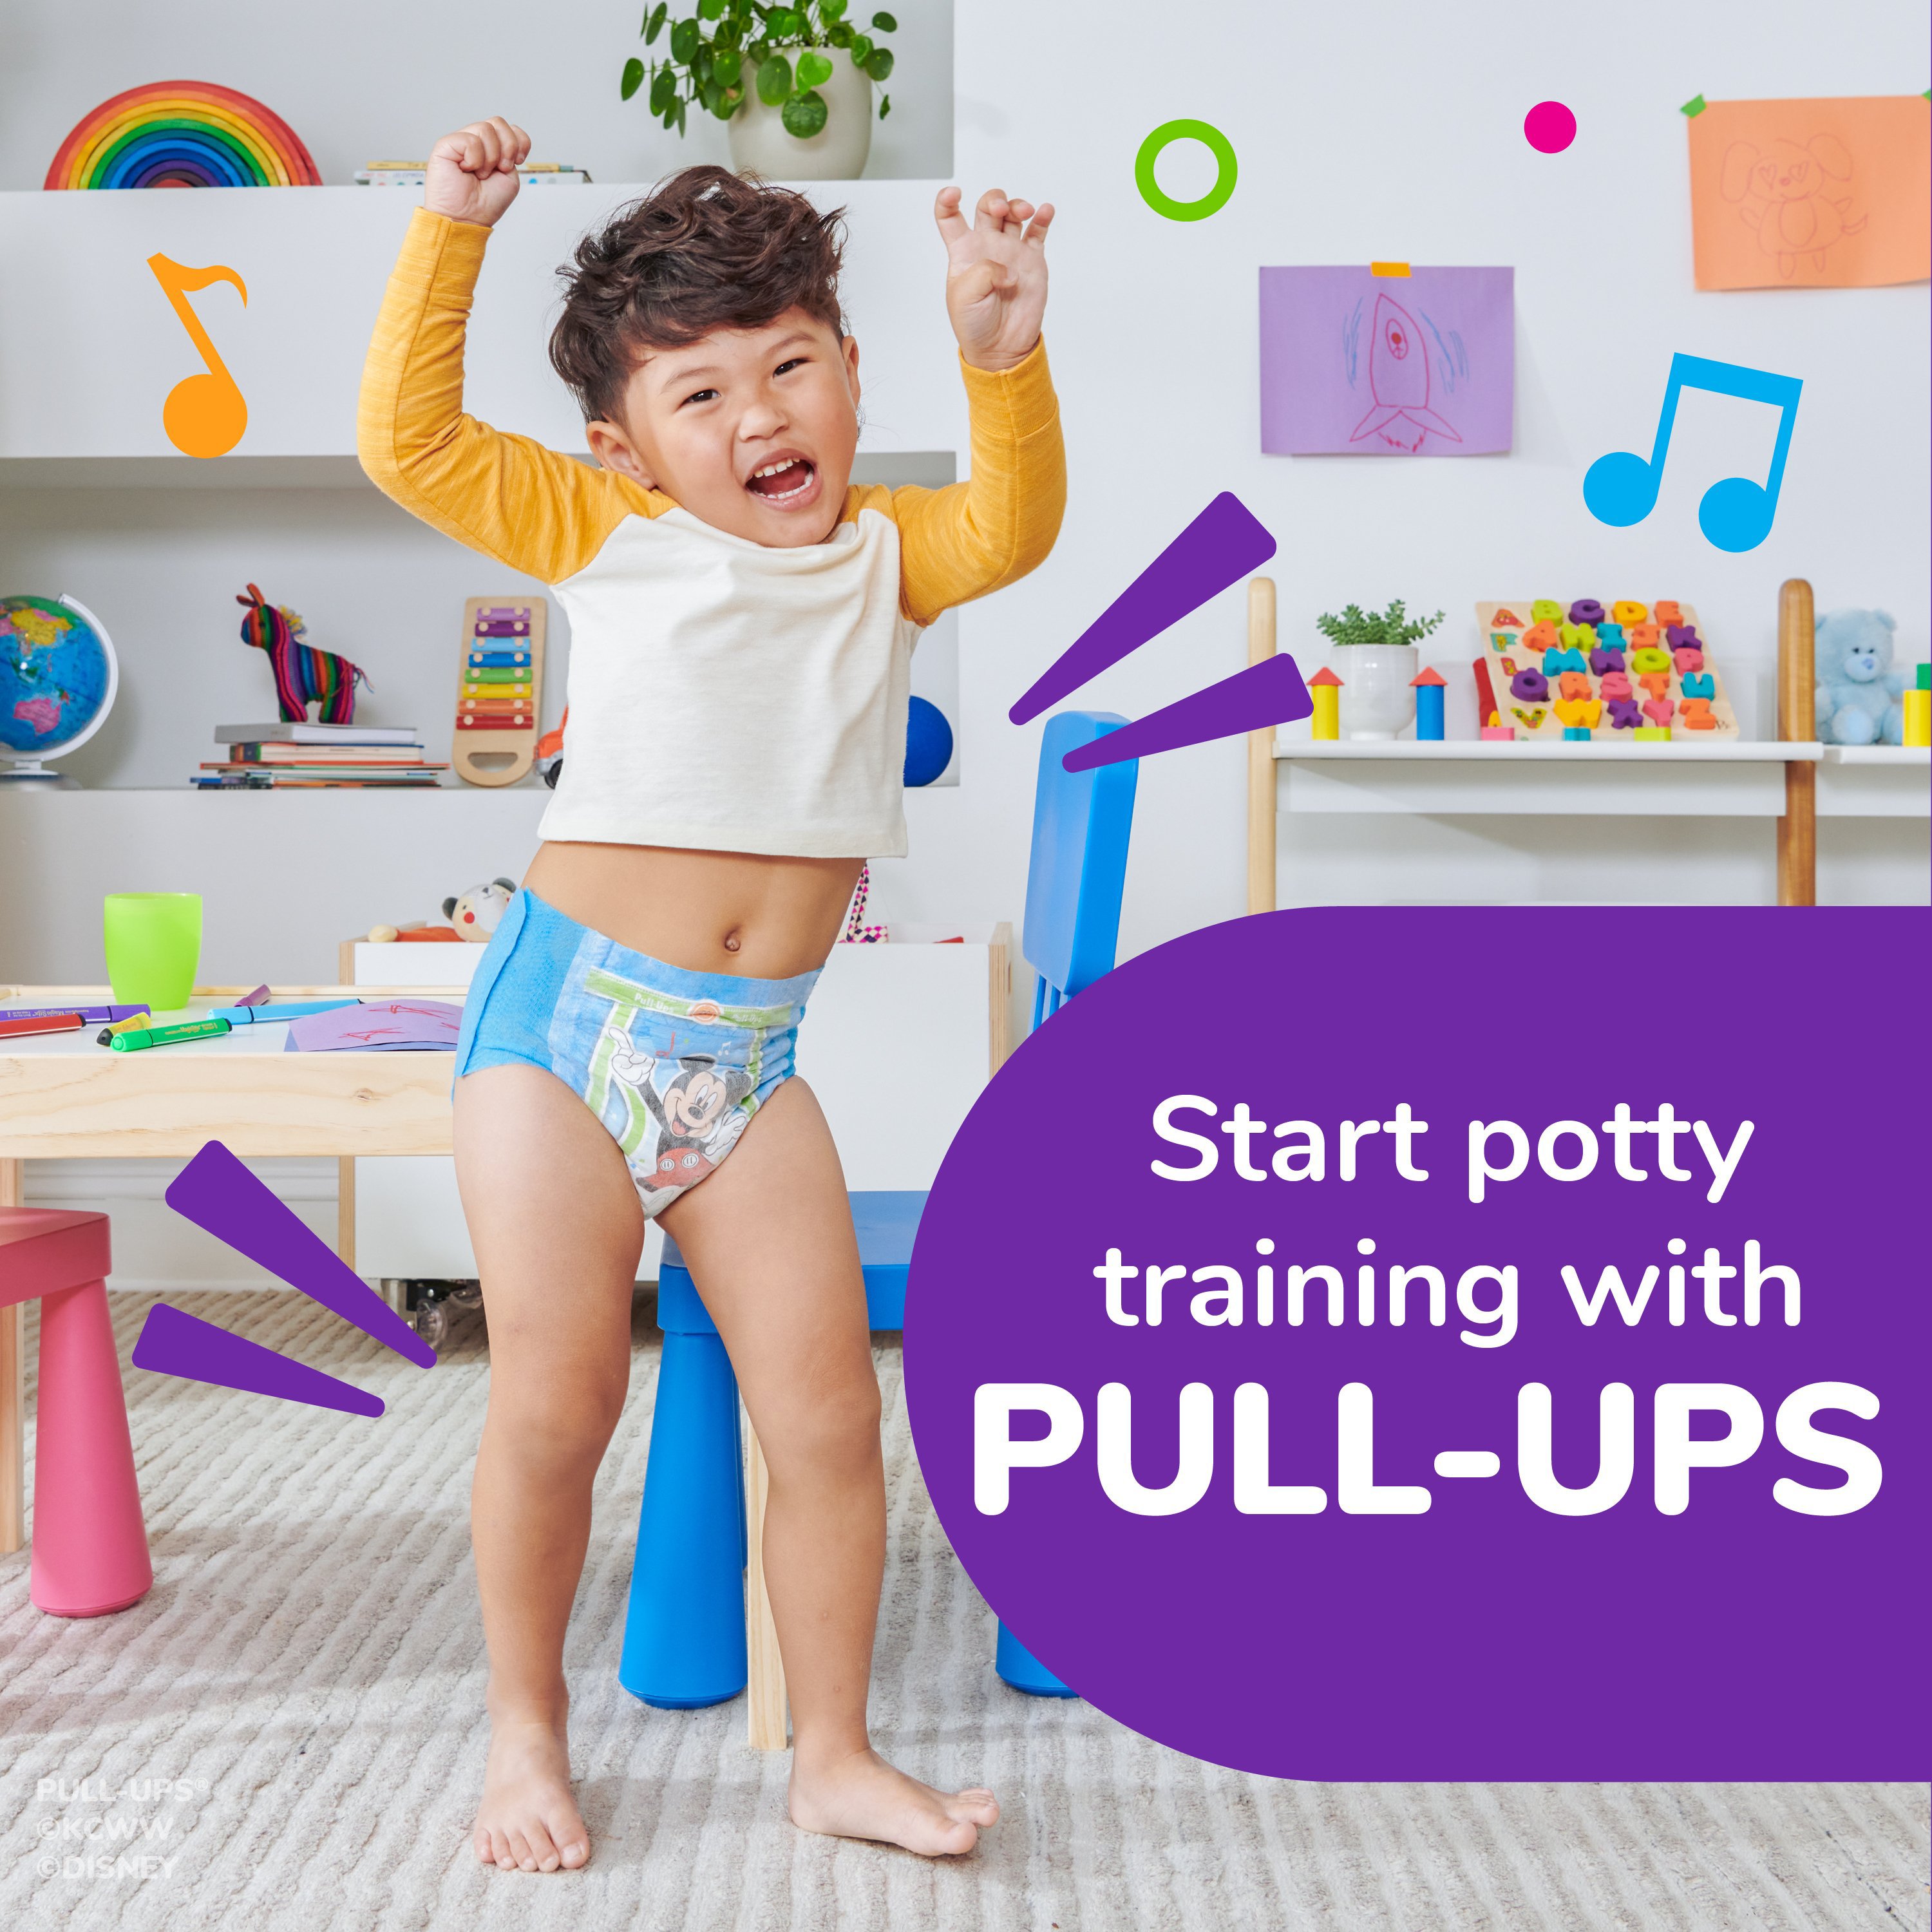 Pull-Ups Boys' Night-Time Potty Training Pants - 3T-4T - Shop Training  Pants at H-E-B